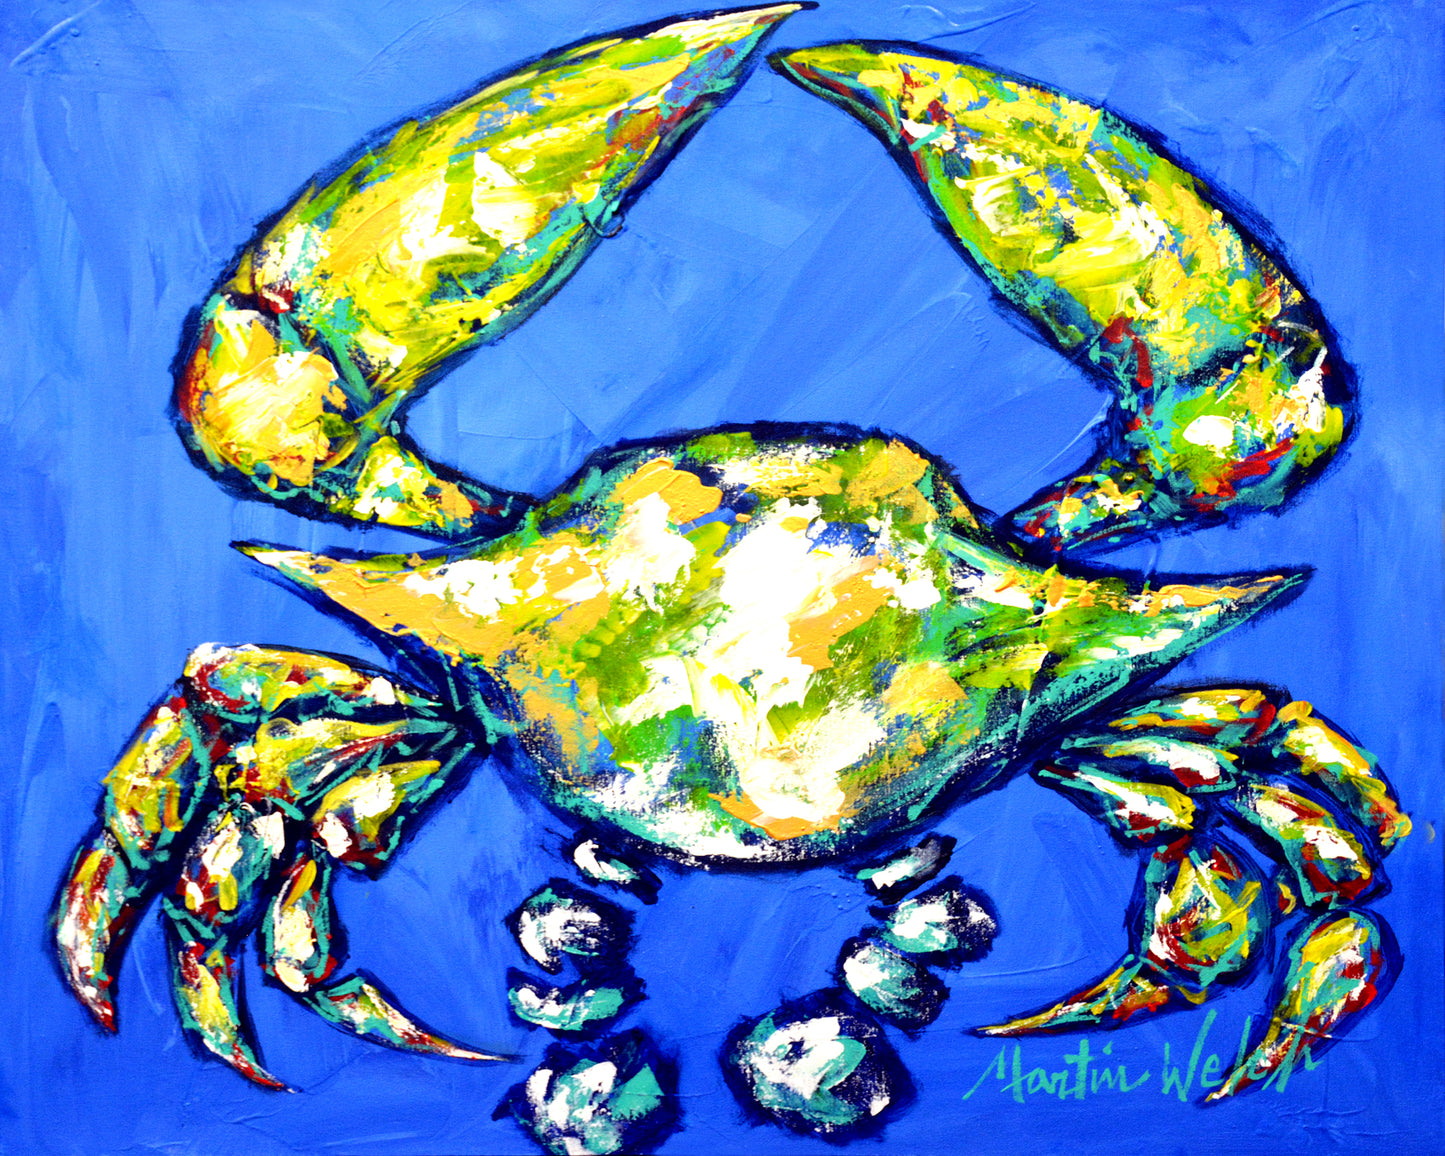 Blue Star - Dungeness Crab - 11"x14" Print